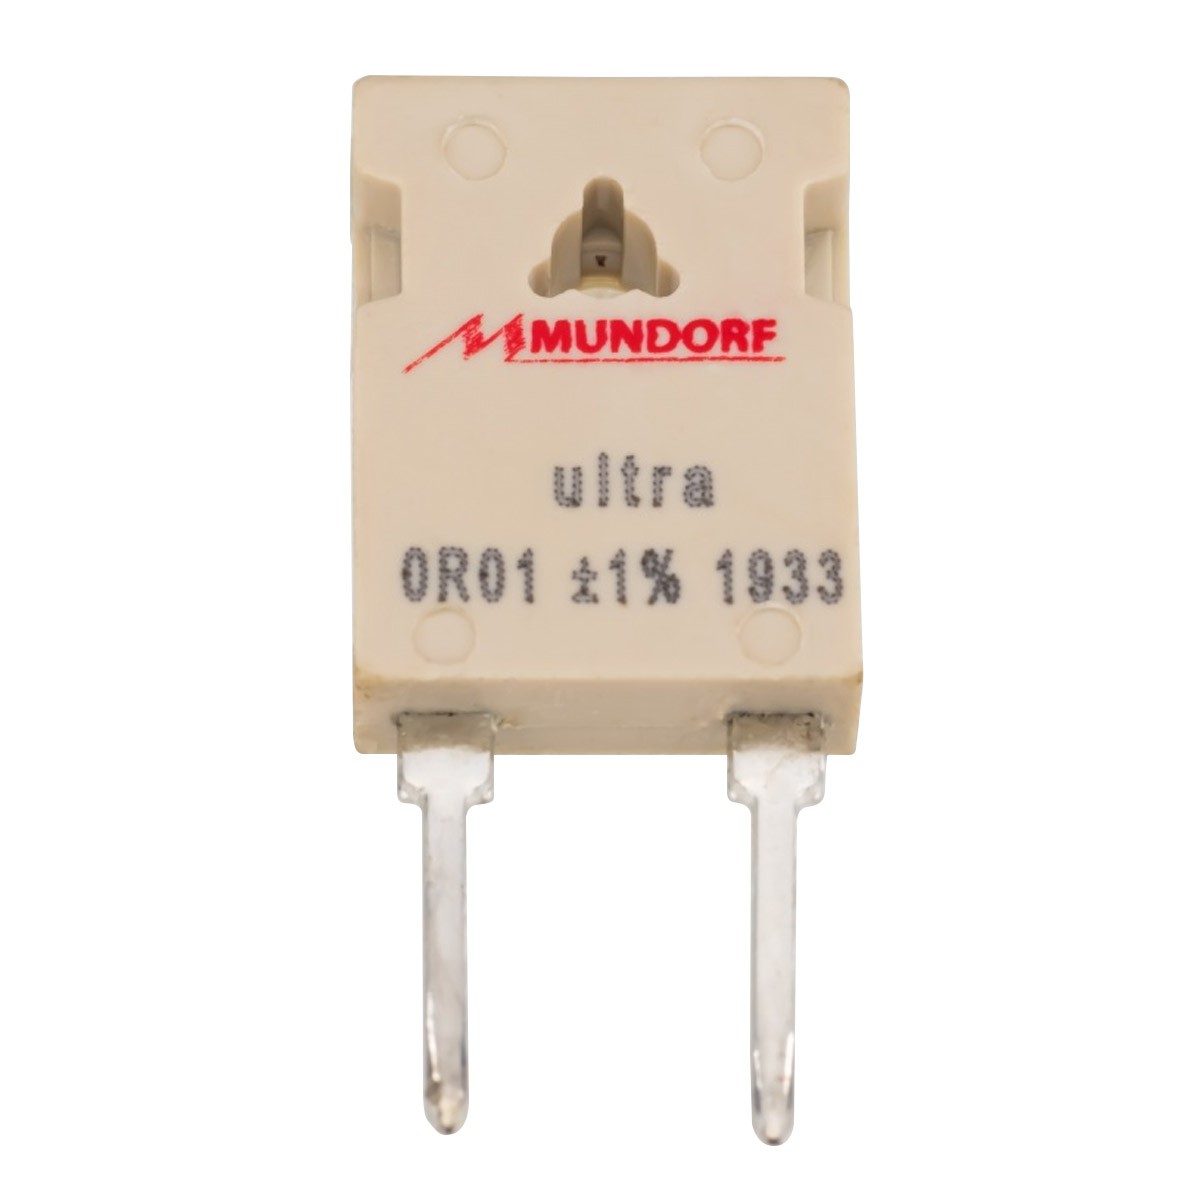 MUNDORF MRESIST ULTRA Resistor 30W 2.2 Ohm